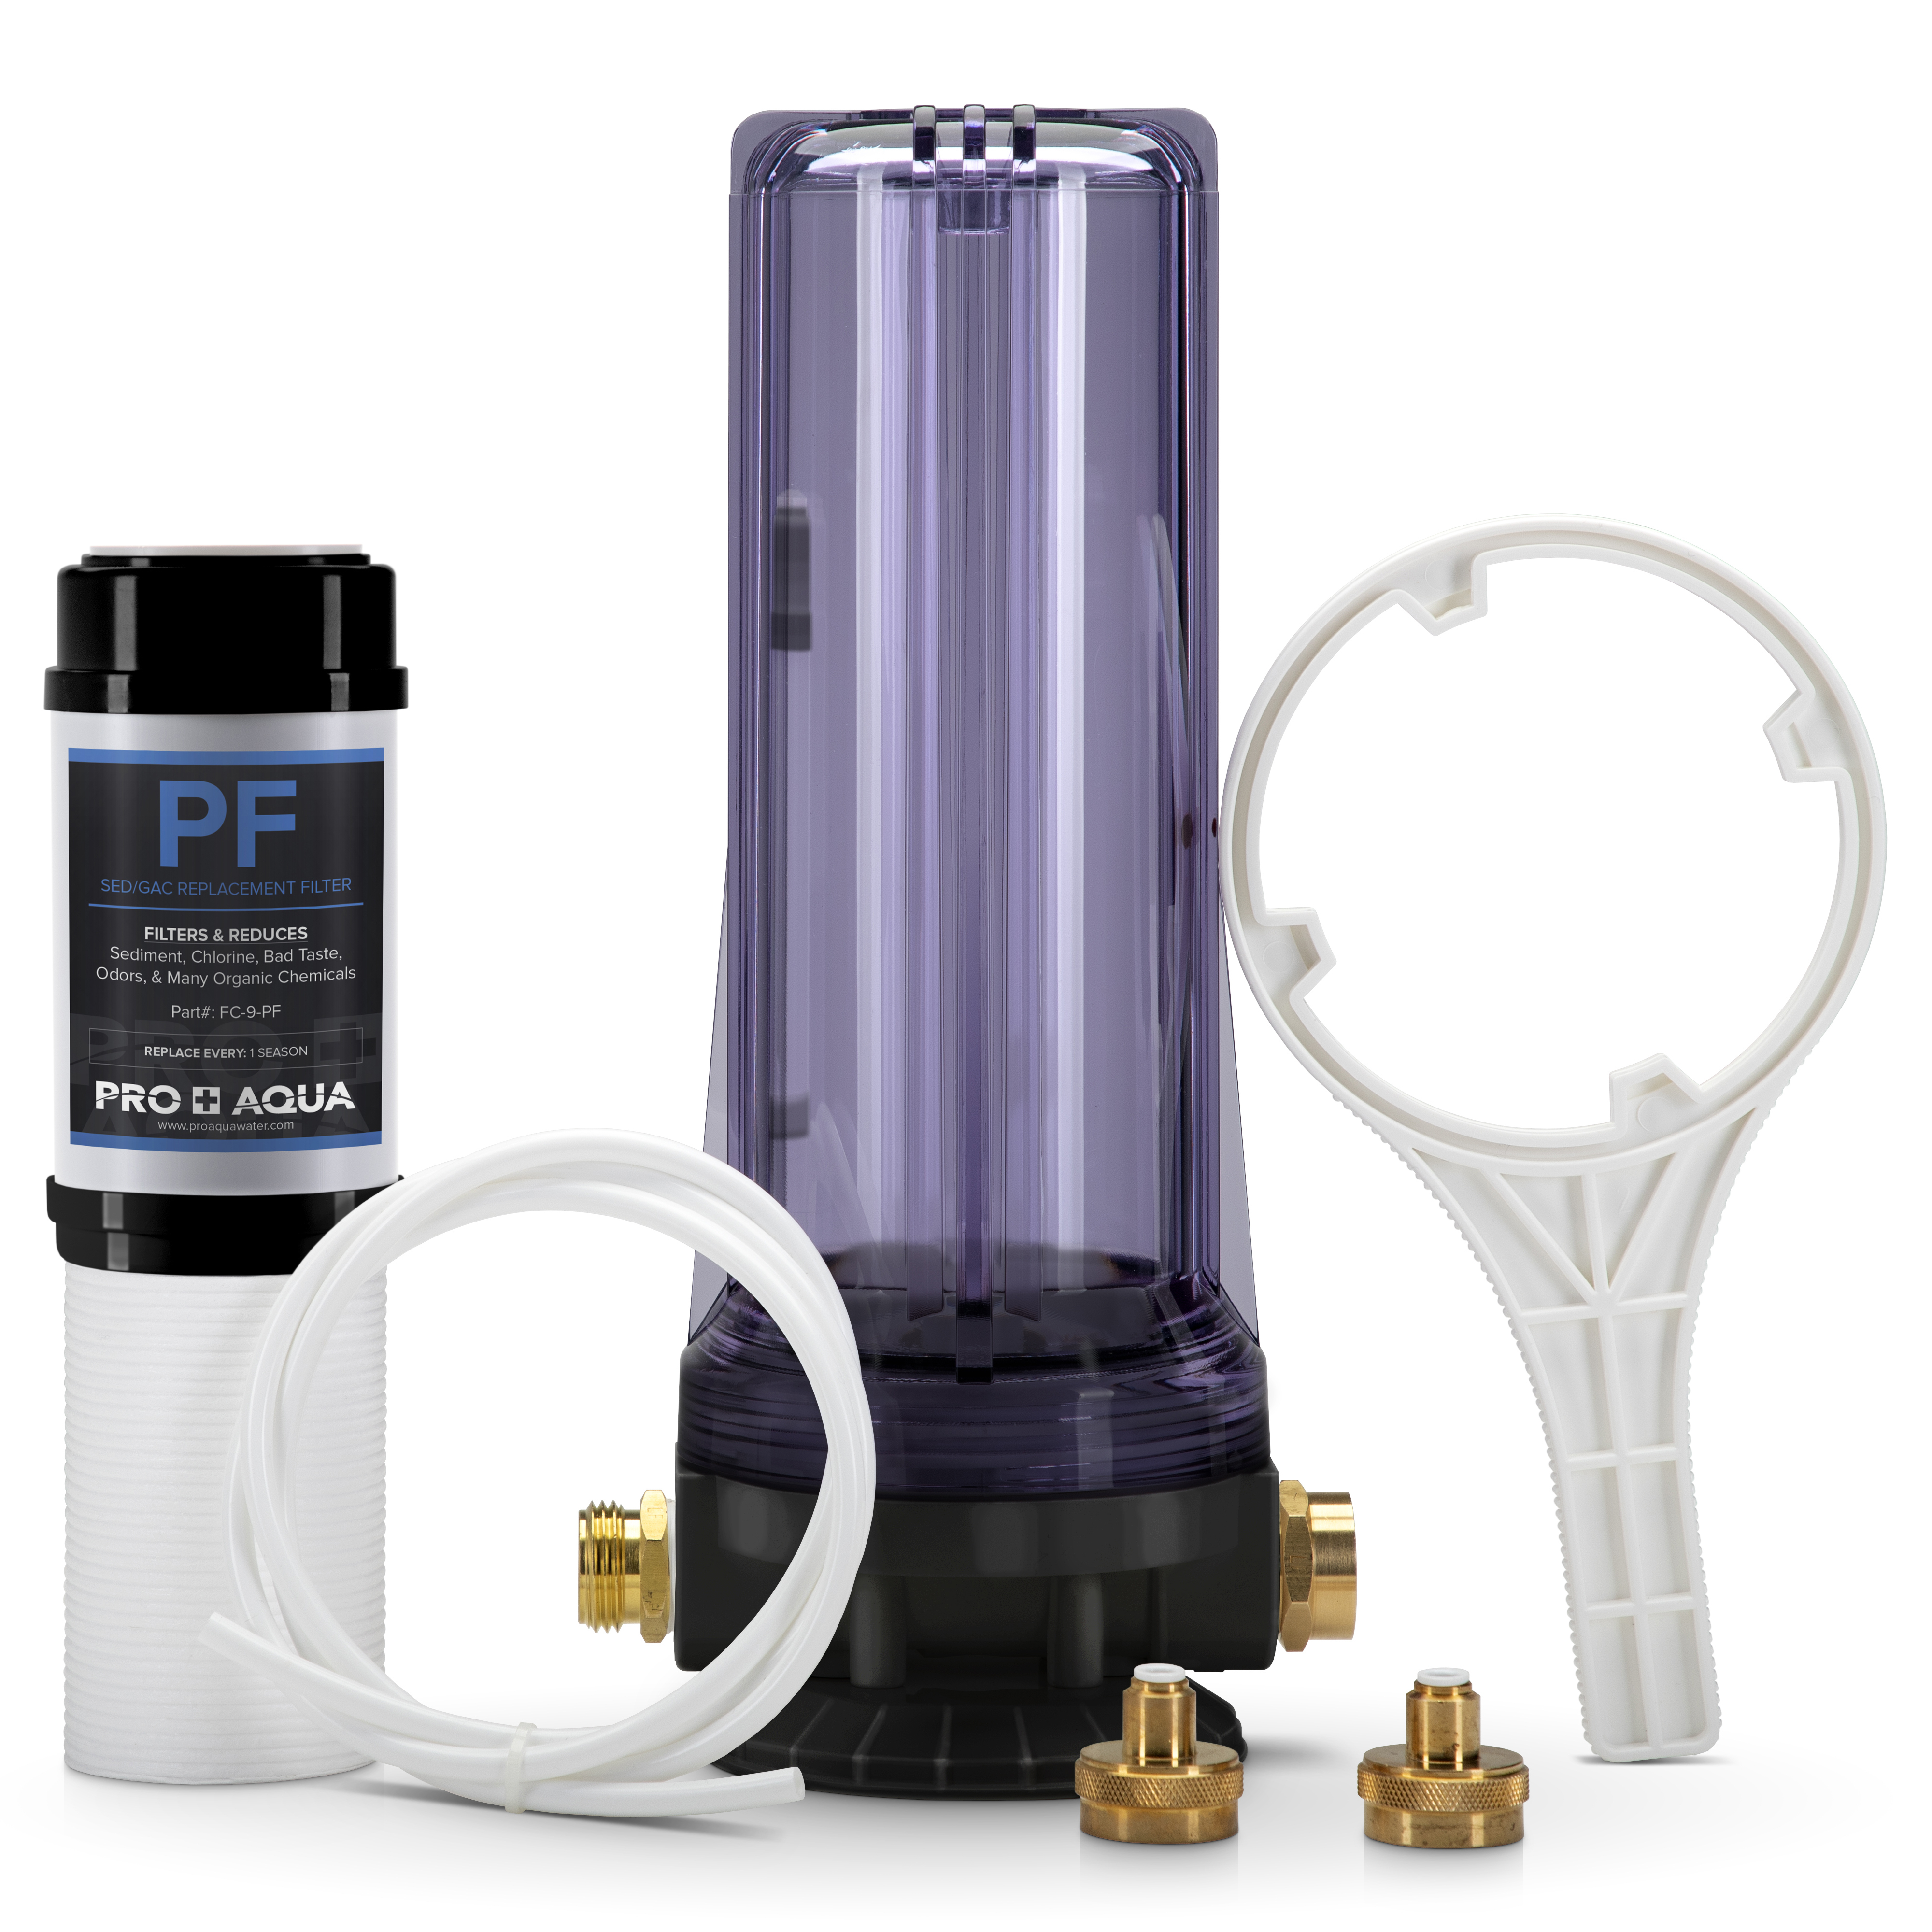 PRO+AQUA Premium Dual RV/Marine Water Softener Regeneration Kit and Water Filter, Reduces Bad Taste, Odor, Sediment, Chlorine